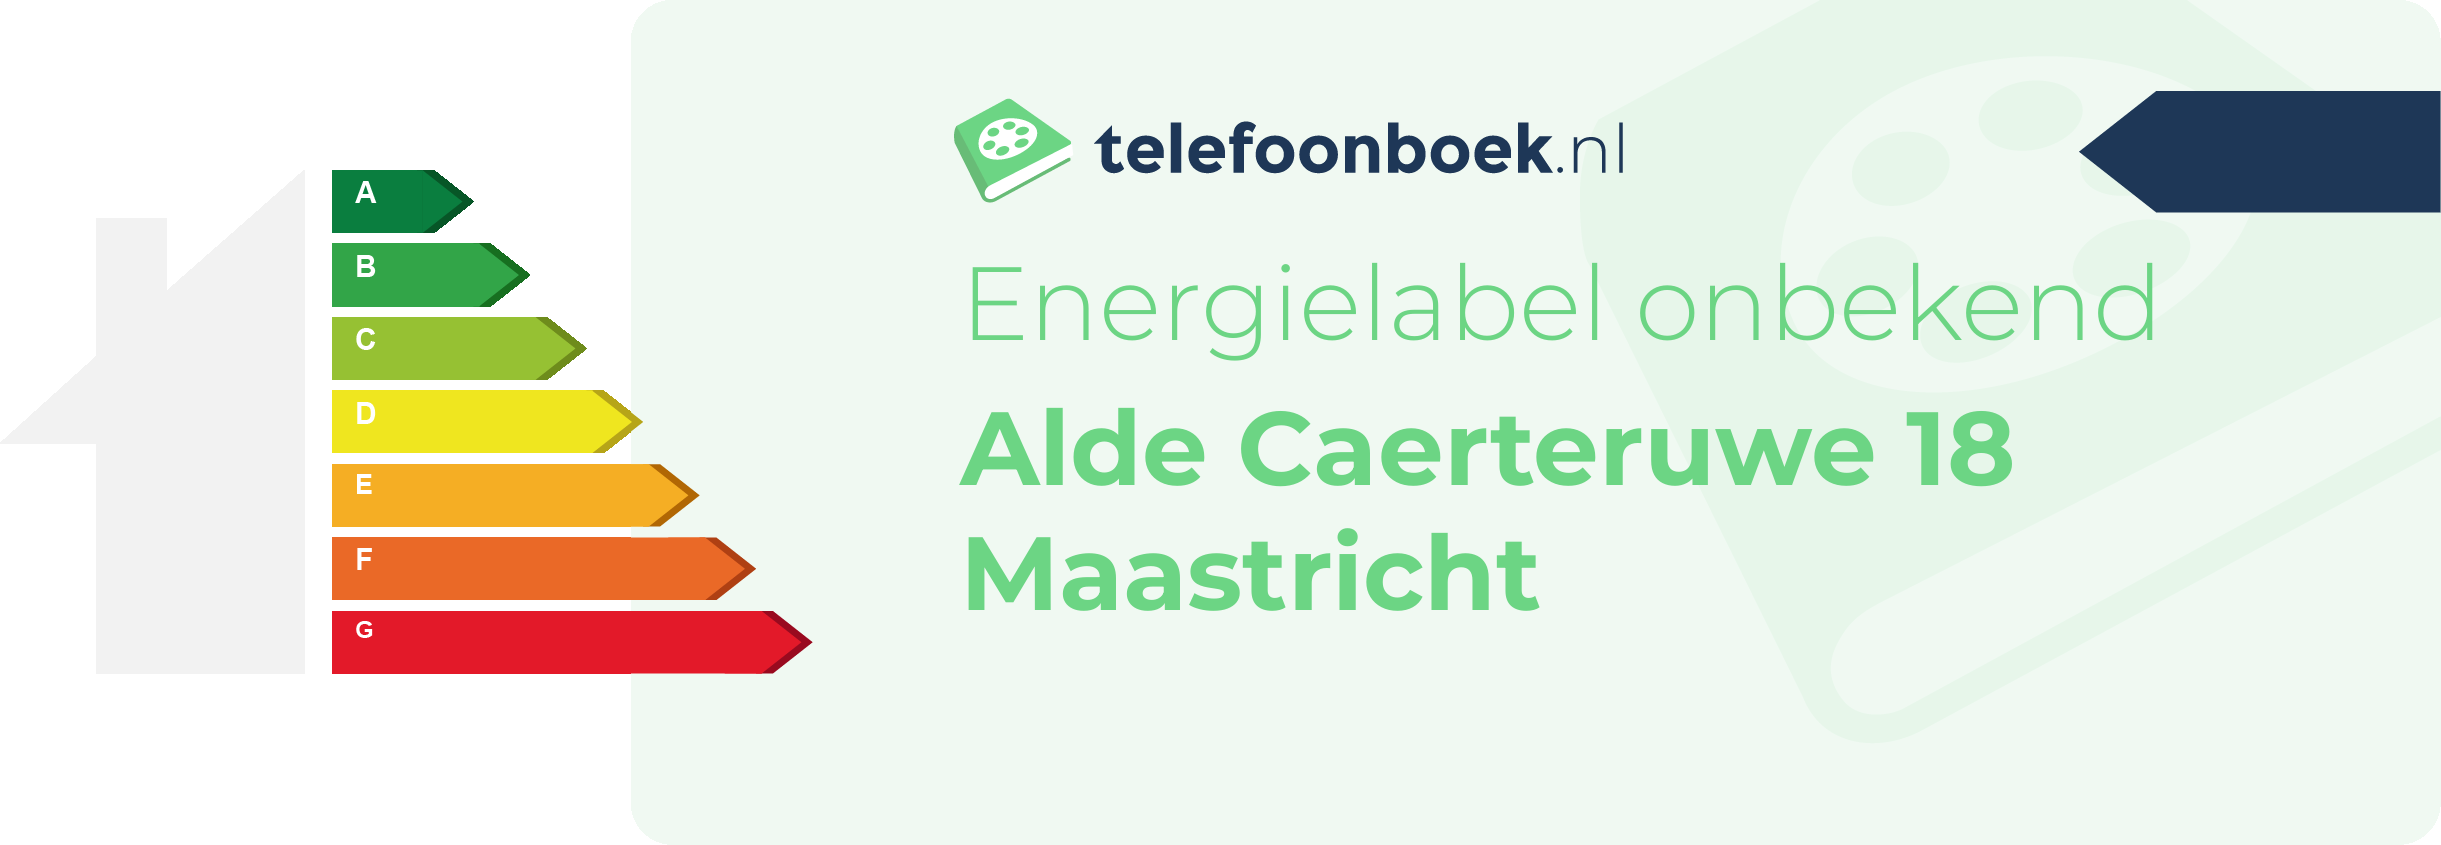 Energielabel Alde Caerteruwe 18 Maastricht